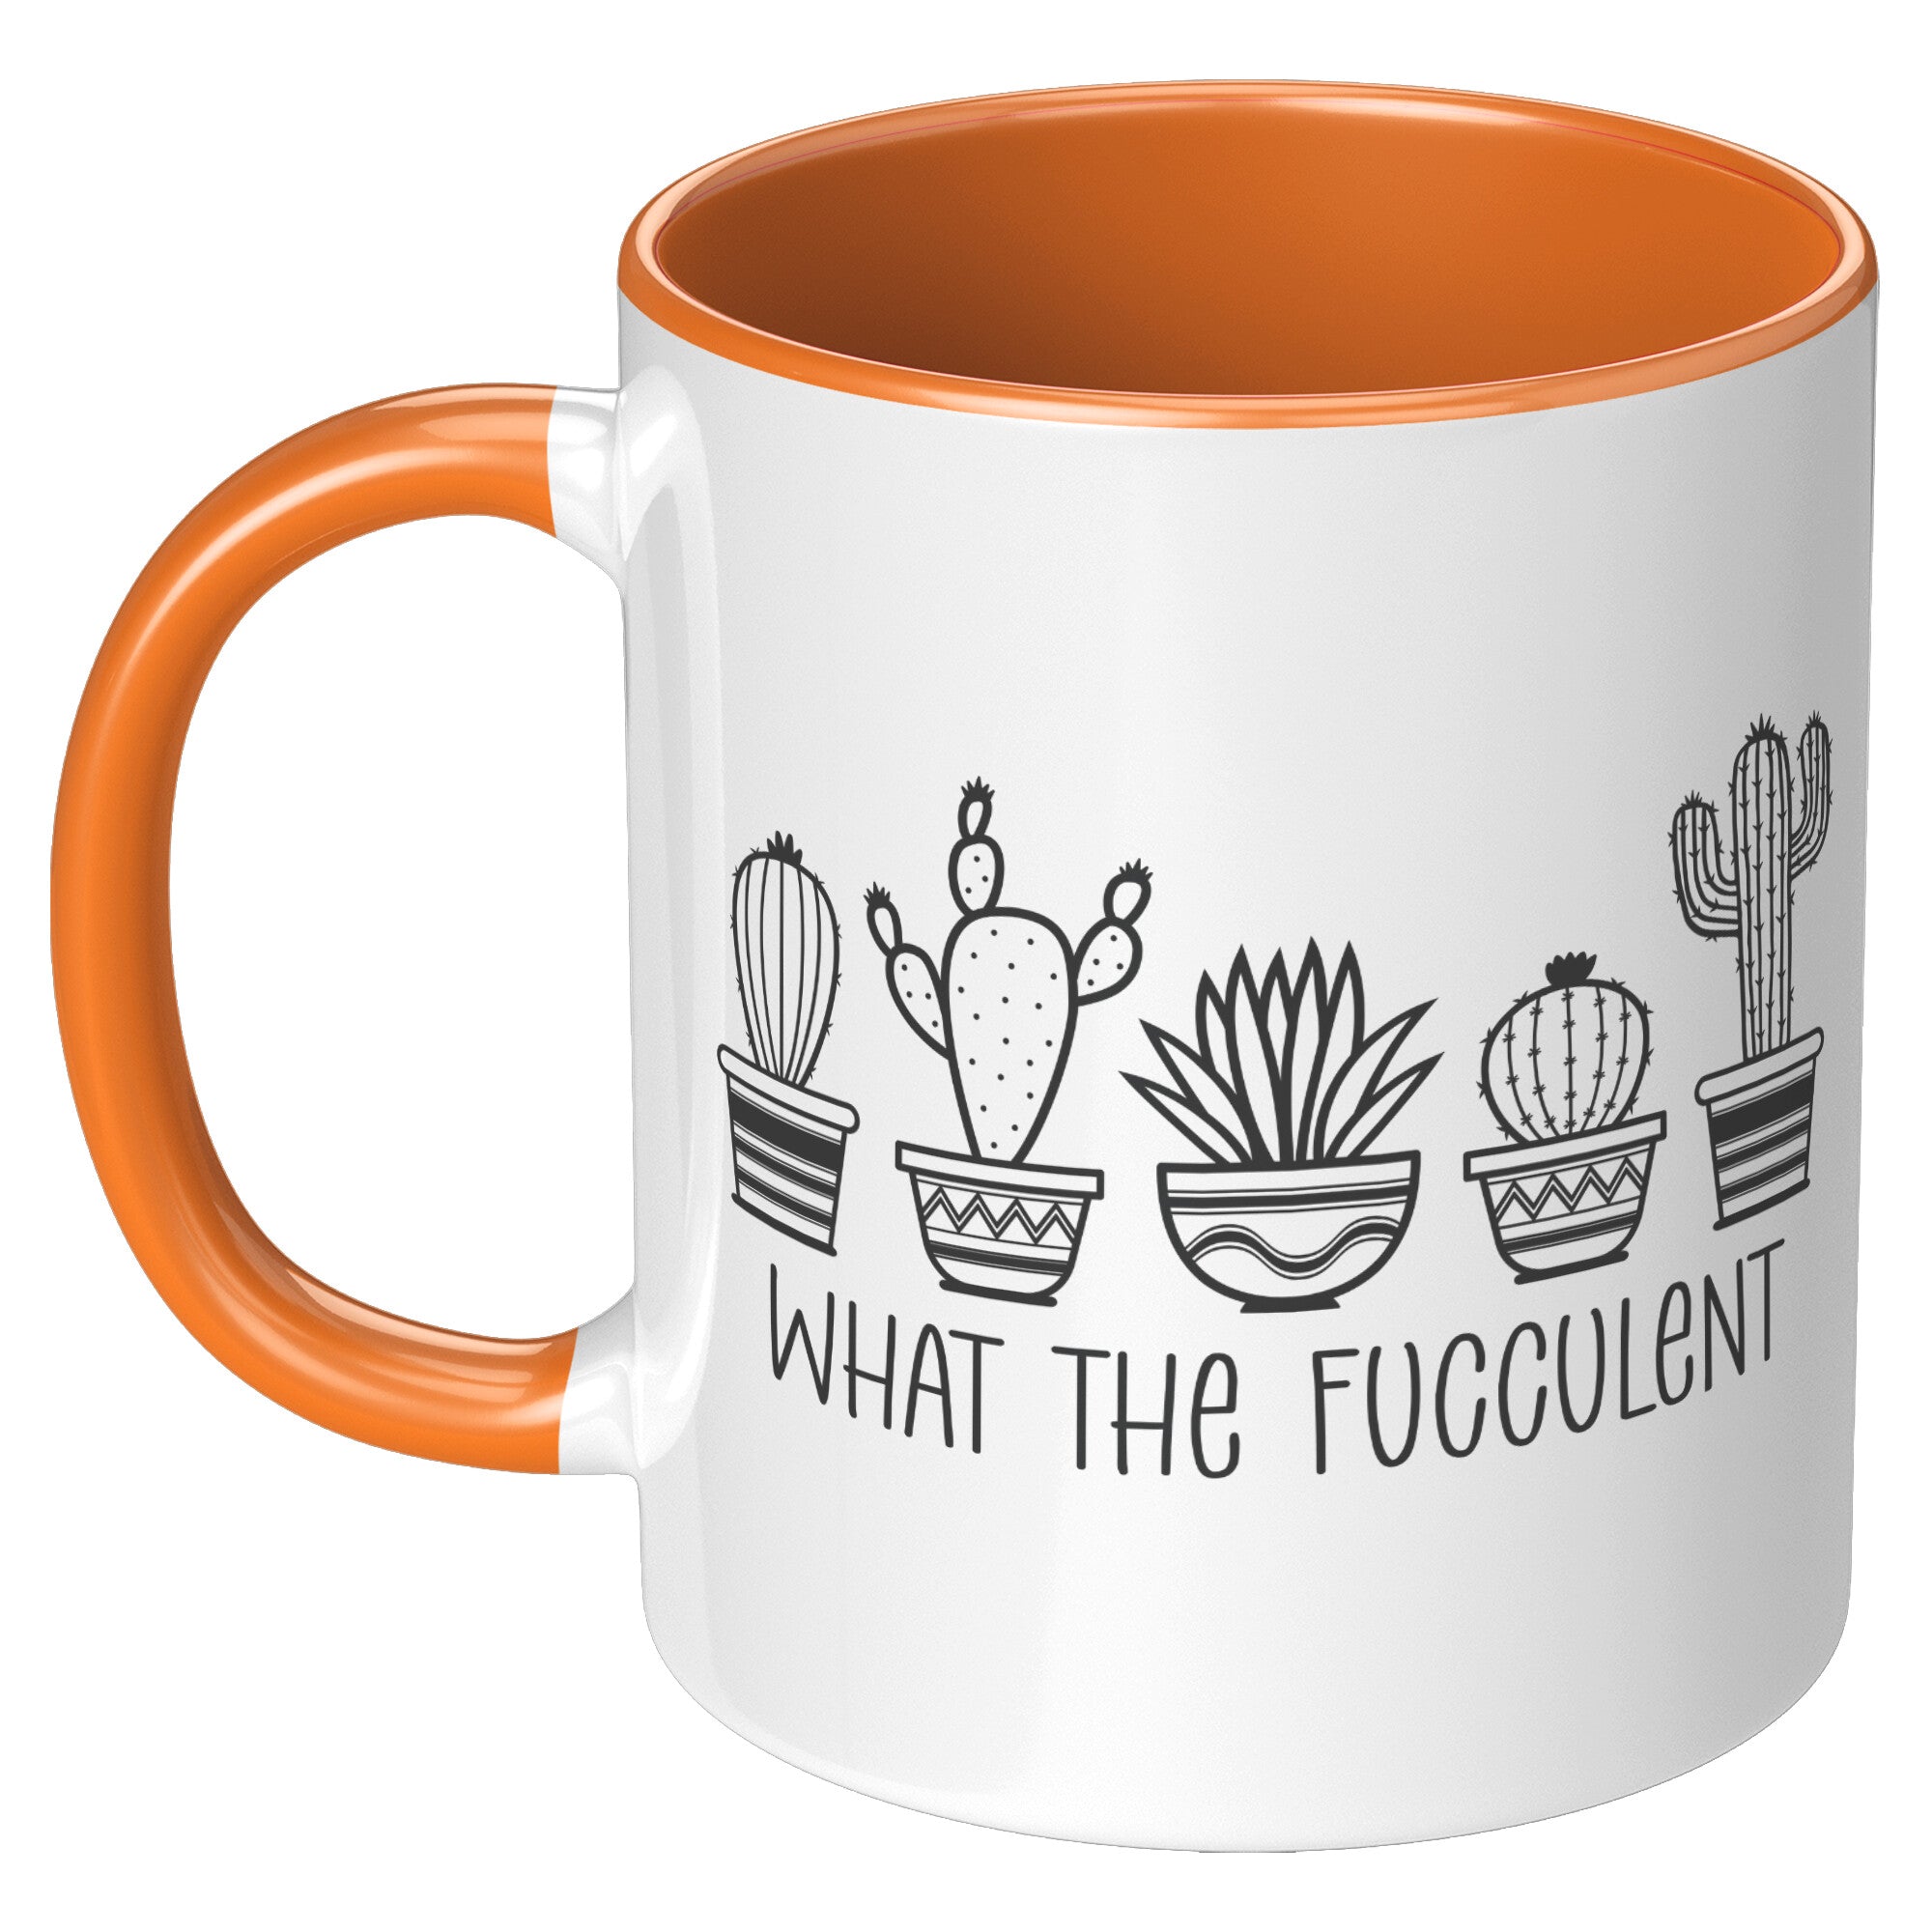 What The Fucculent Ceramic Coffee Mug For Gardeners.